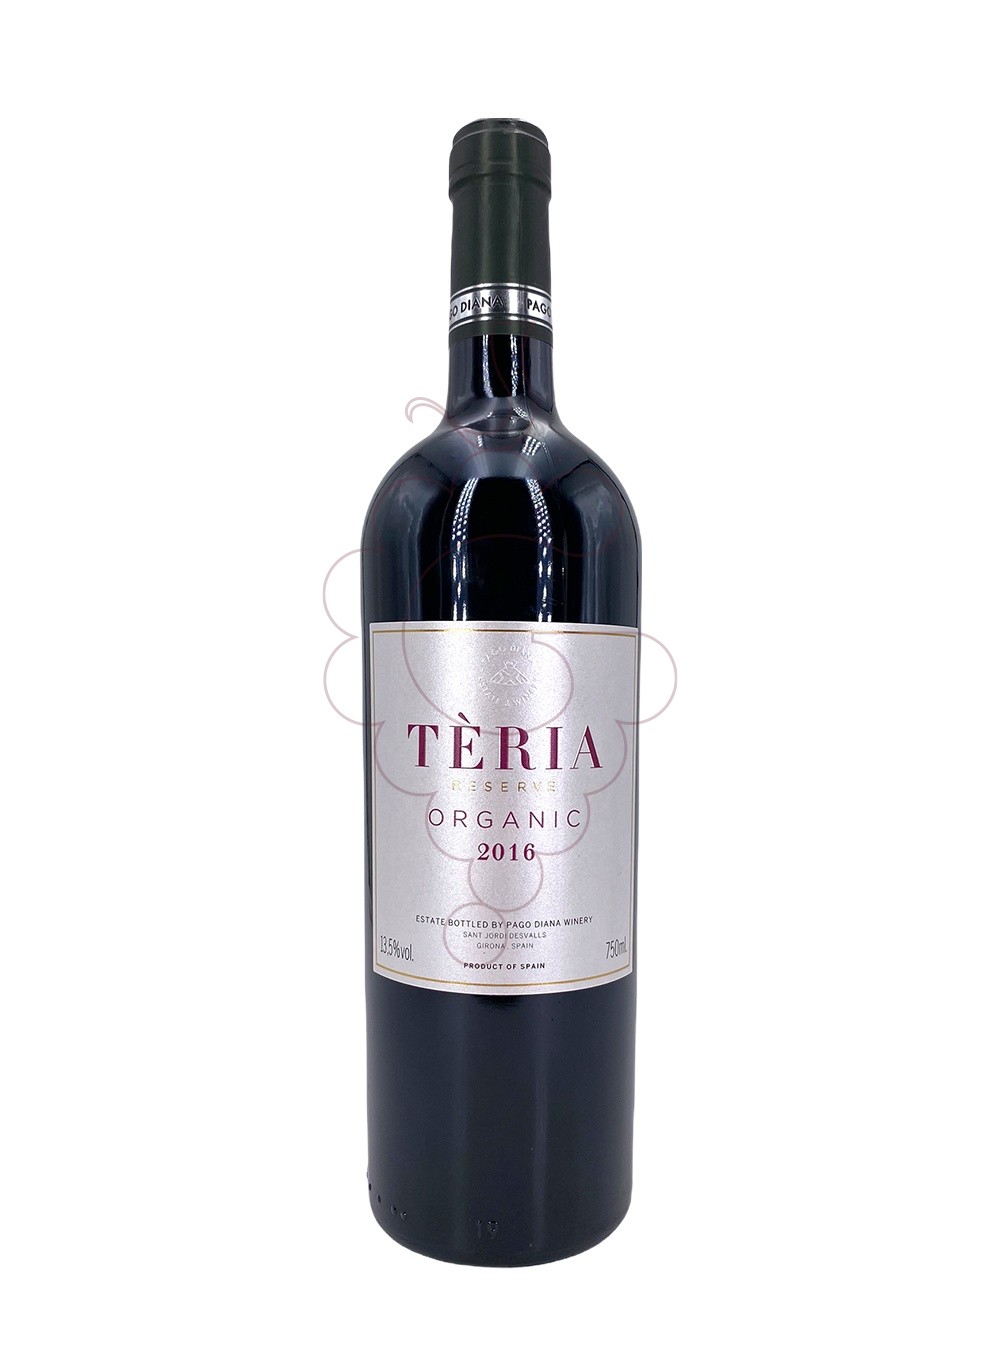 Photo Teria reserva 2016 organic vin rouge